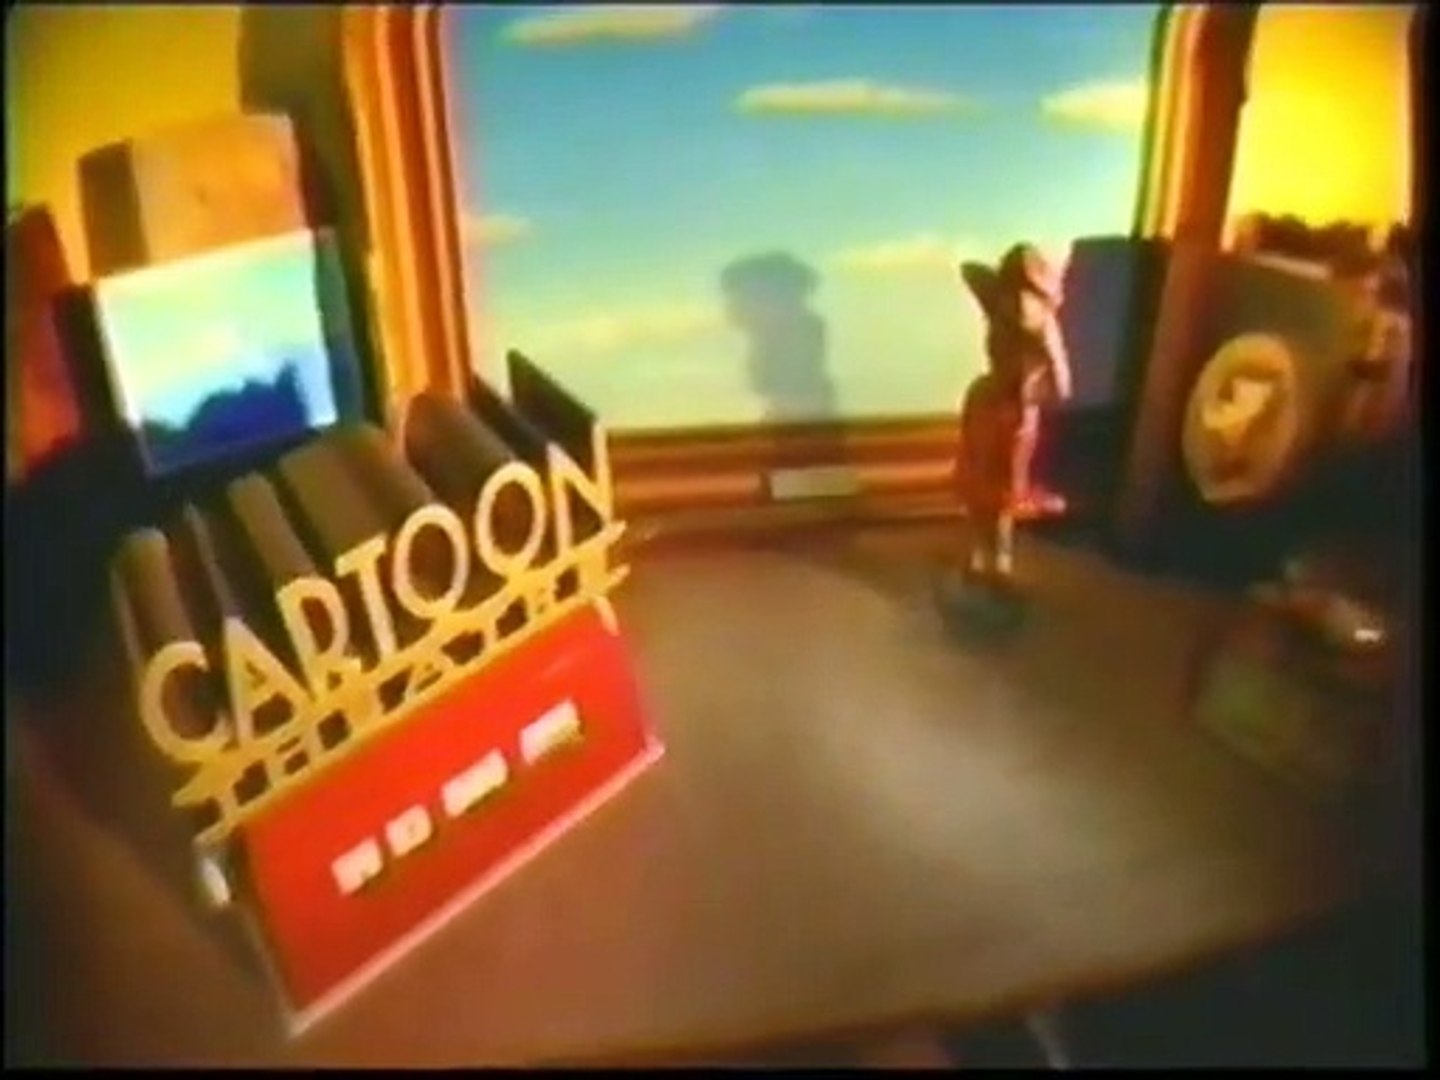 cartoon network movie theater bumper